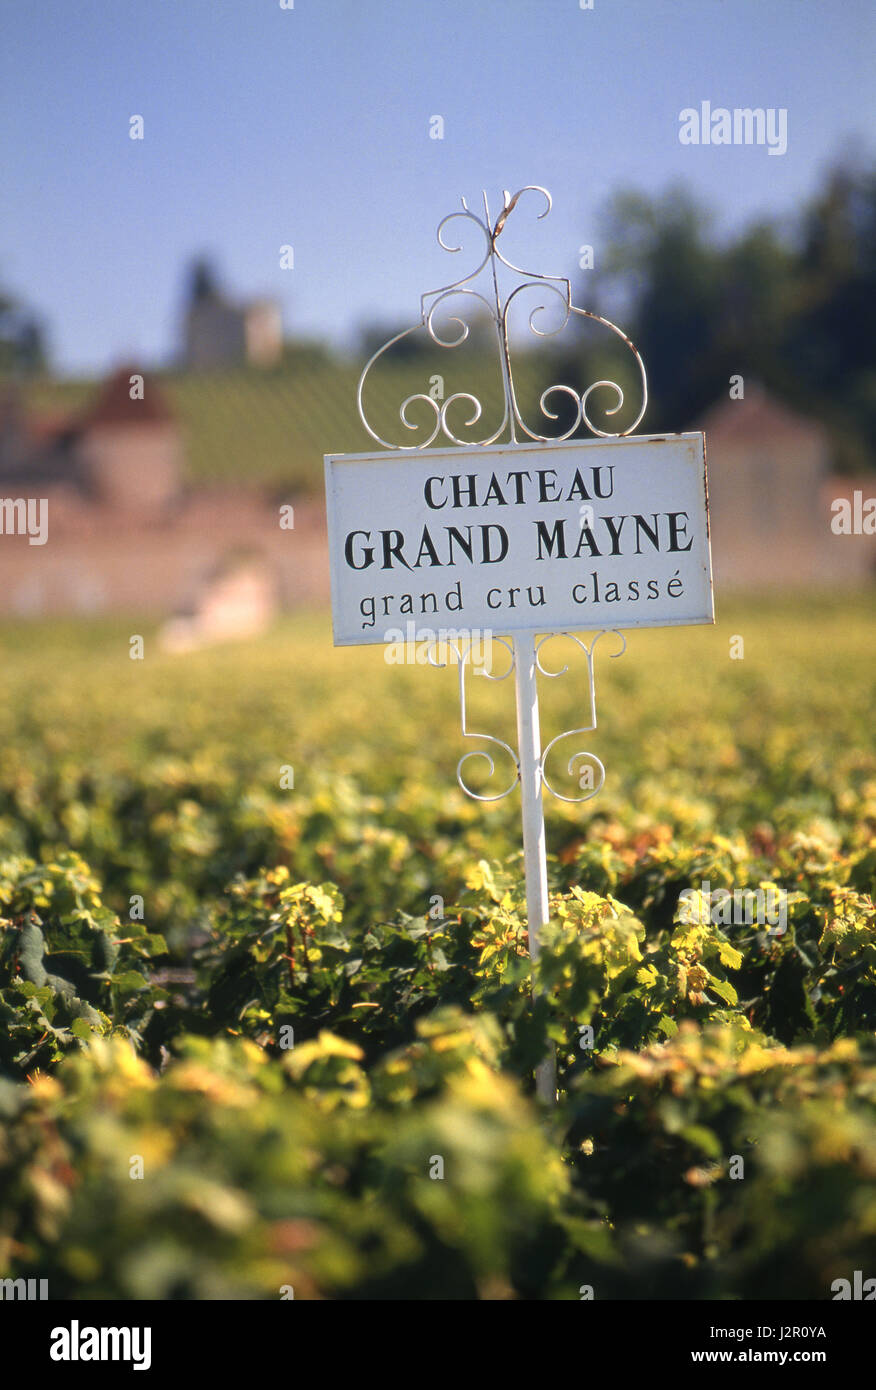 Château Grand Mayne Metallschild im Weinberg von Château Grand Mayne, St-Émilion, Gironde, Frankreich. Stockfoto